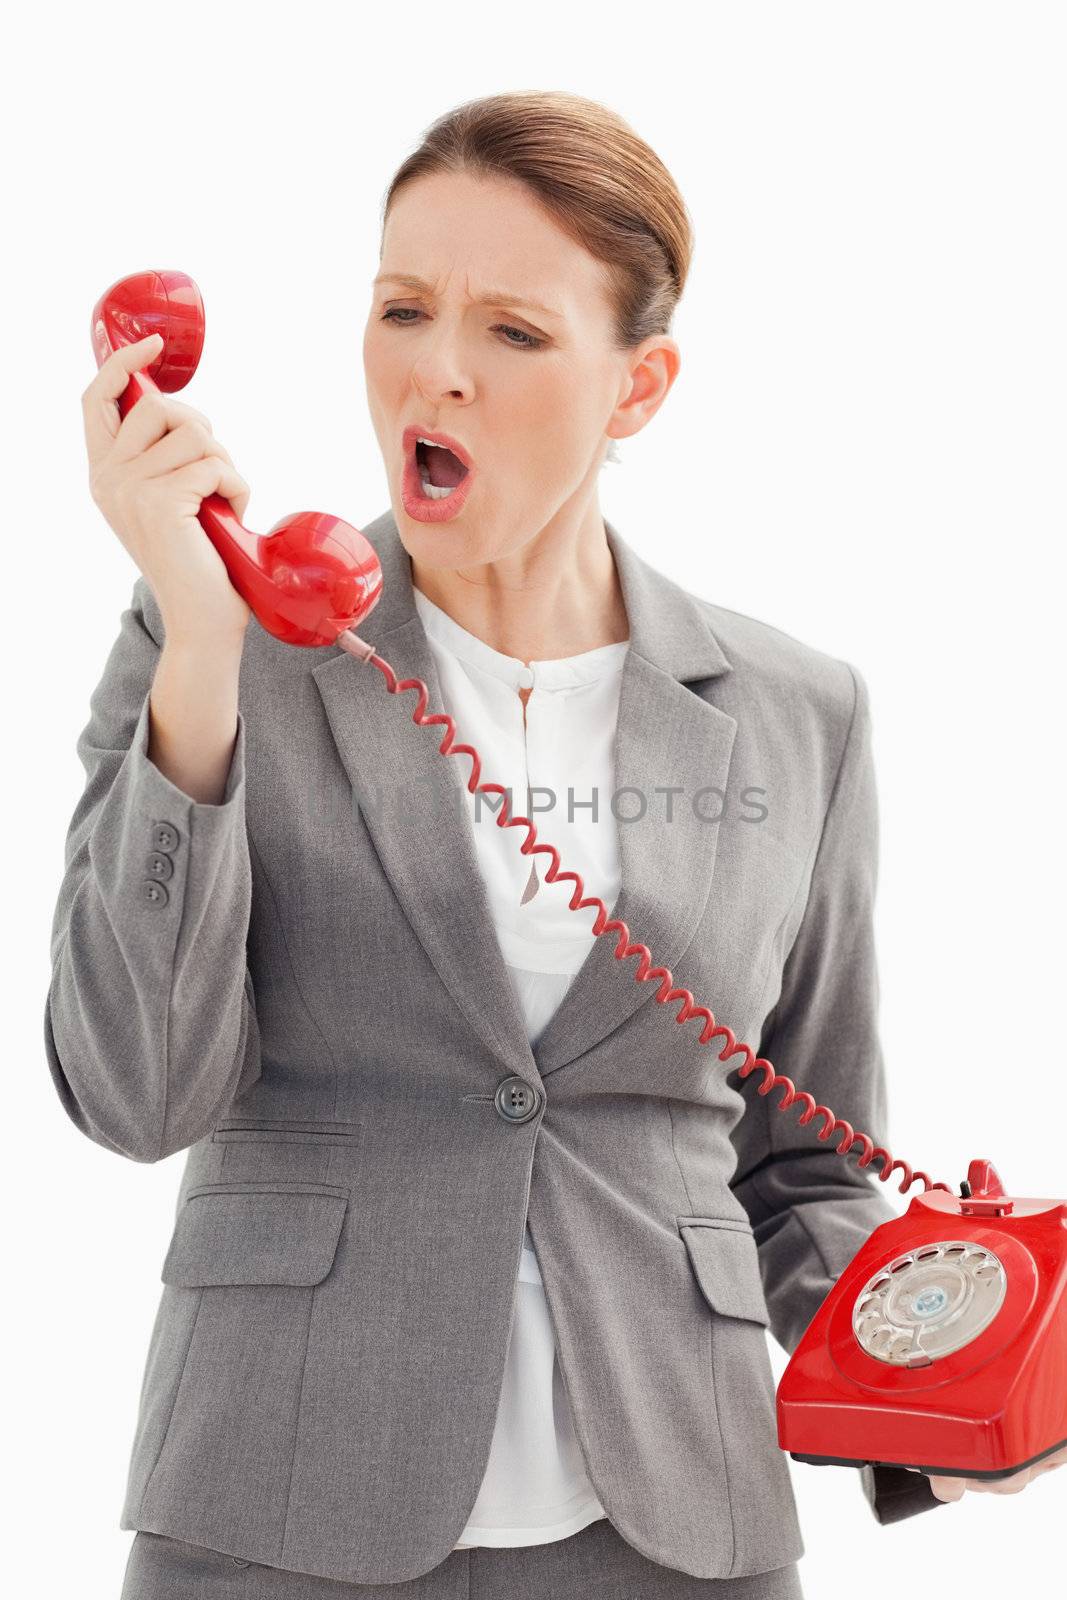 Businesswoman shouts down the phone by Wavebreakmedia